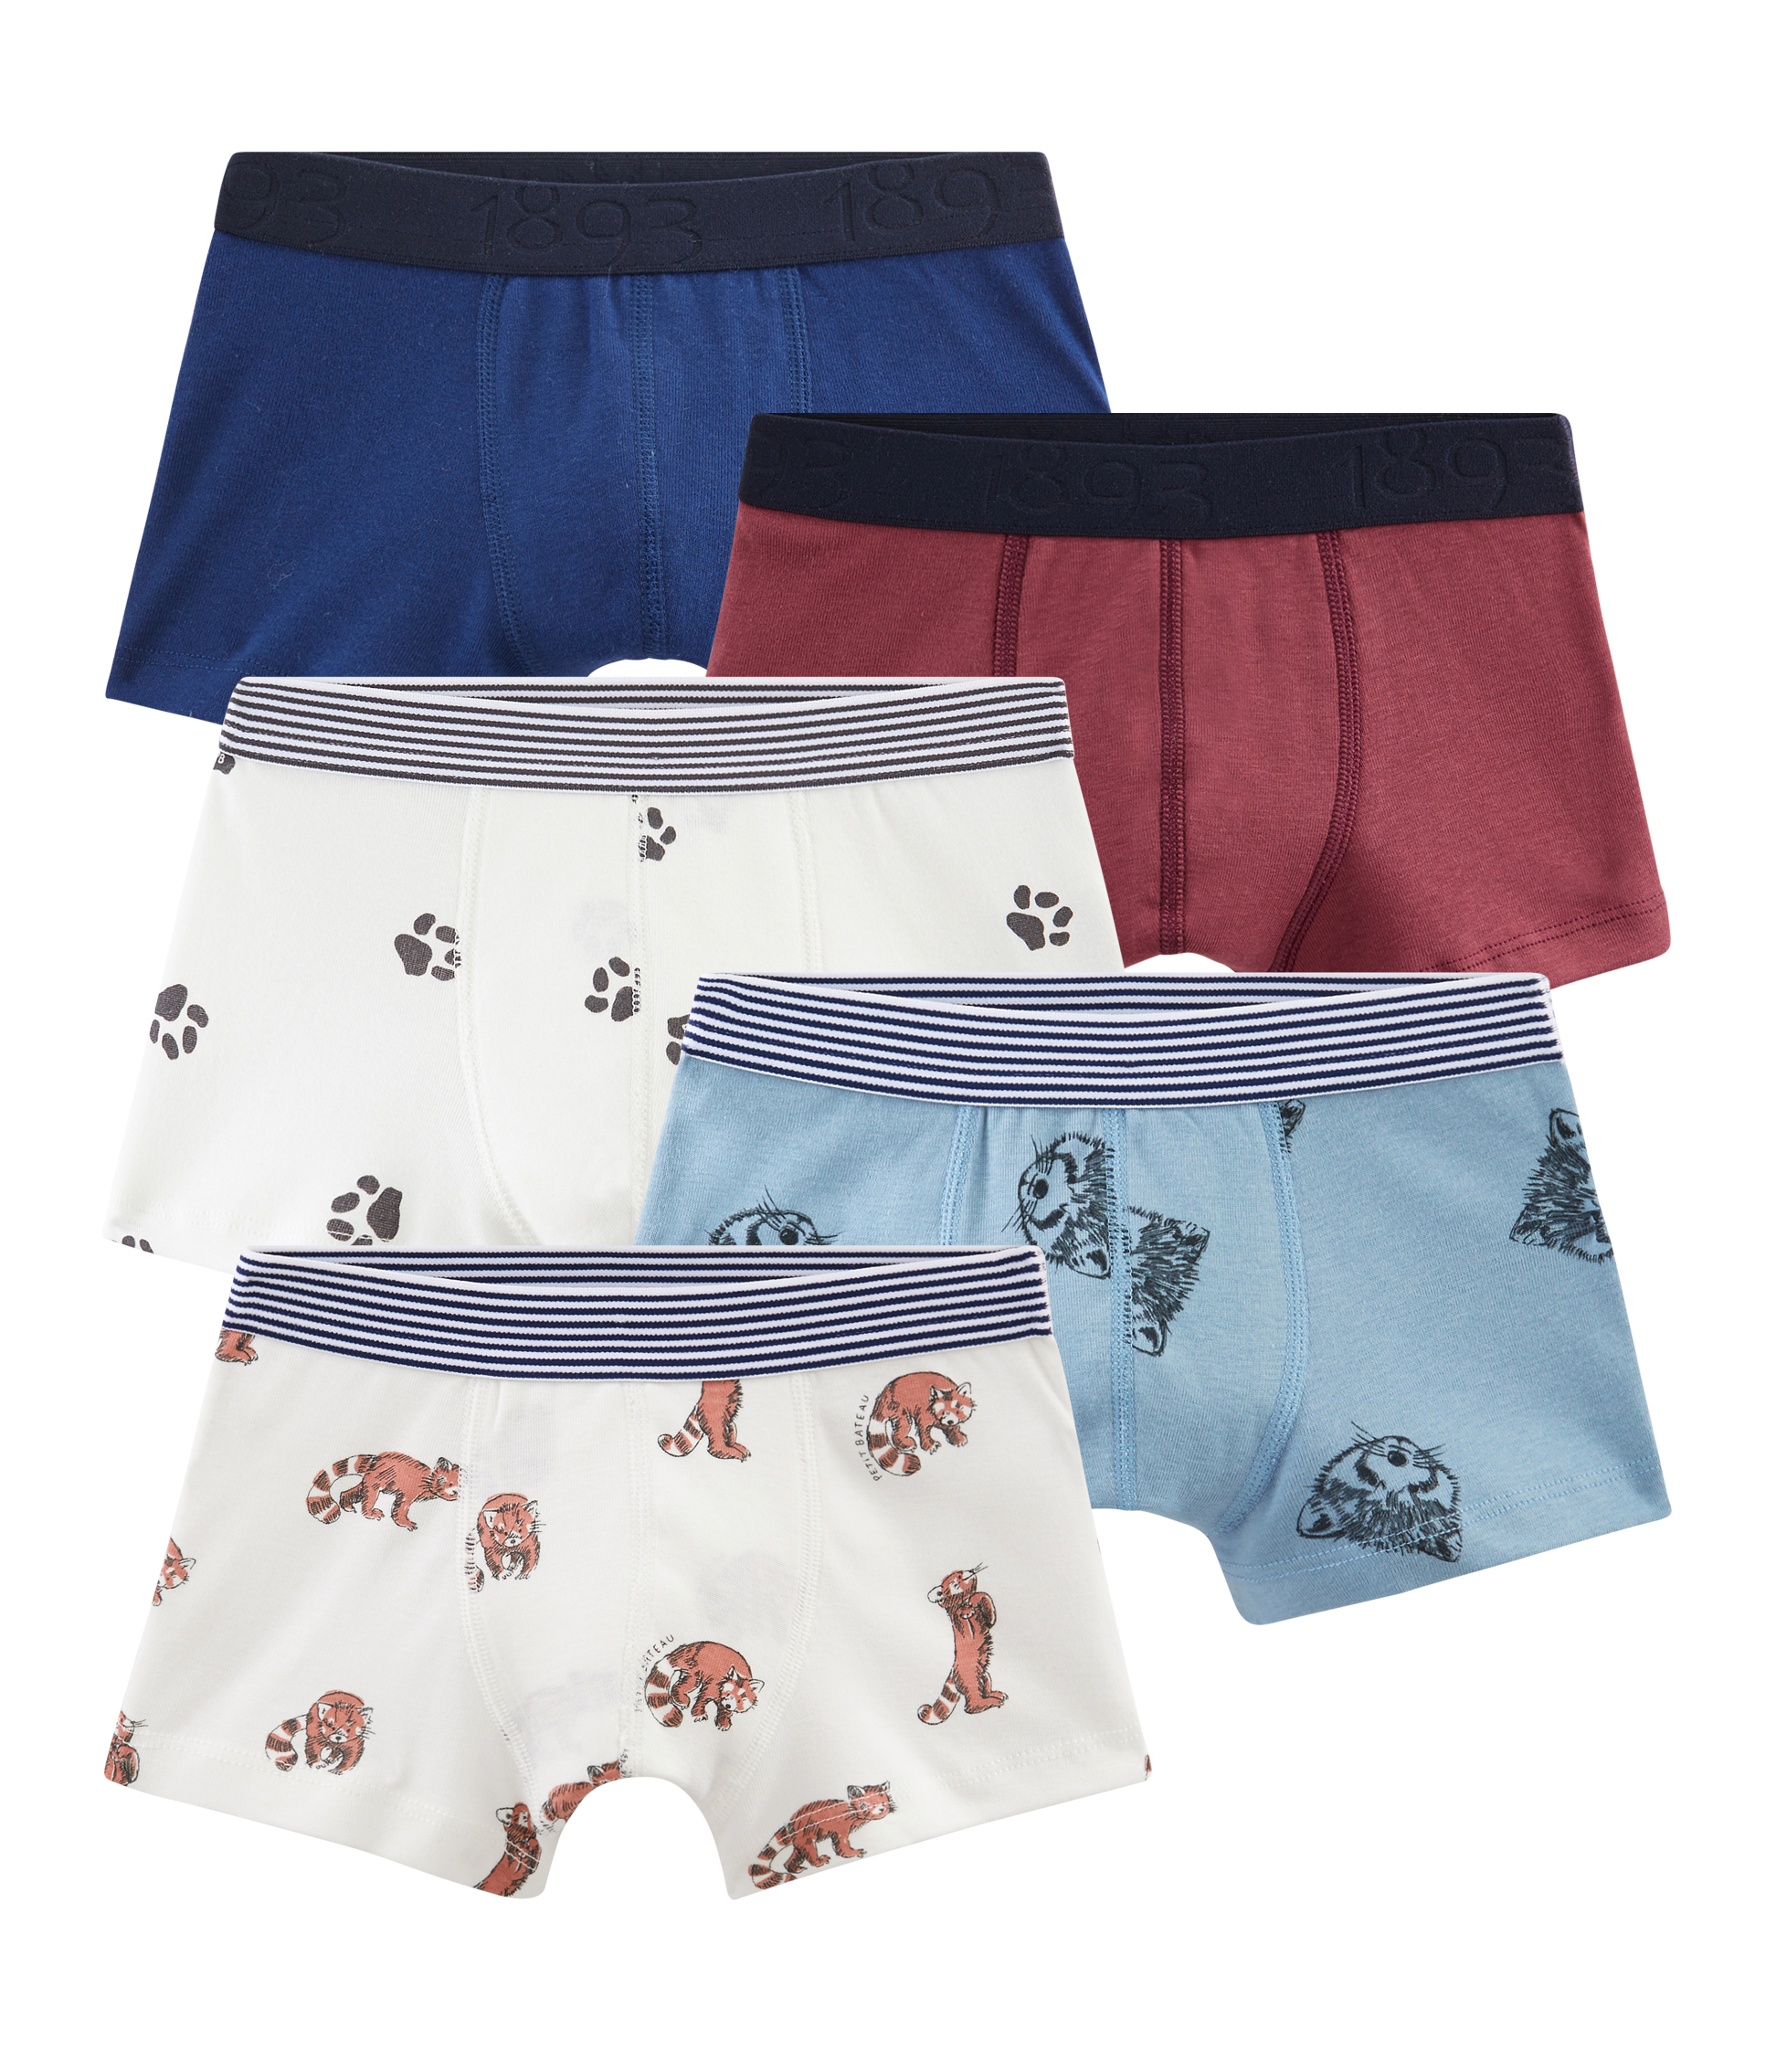 Pack of 5 Petit Bateau Boys Boxer Shorts